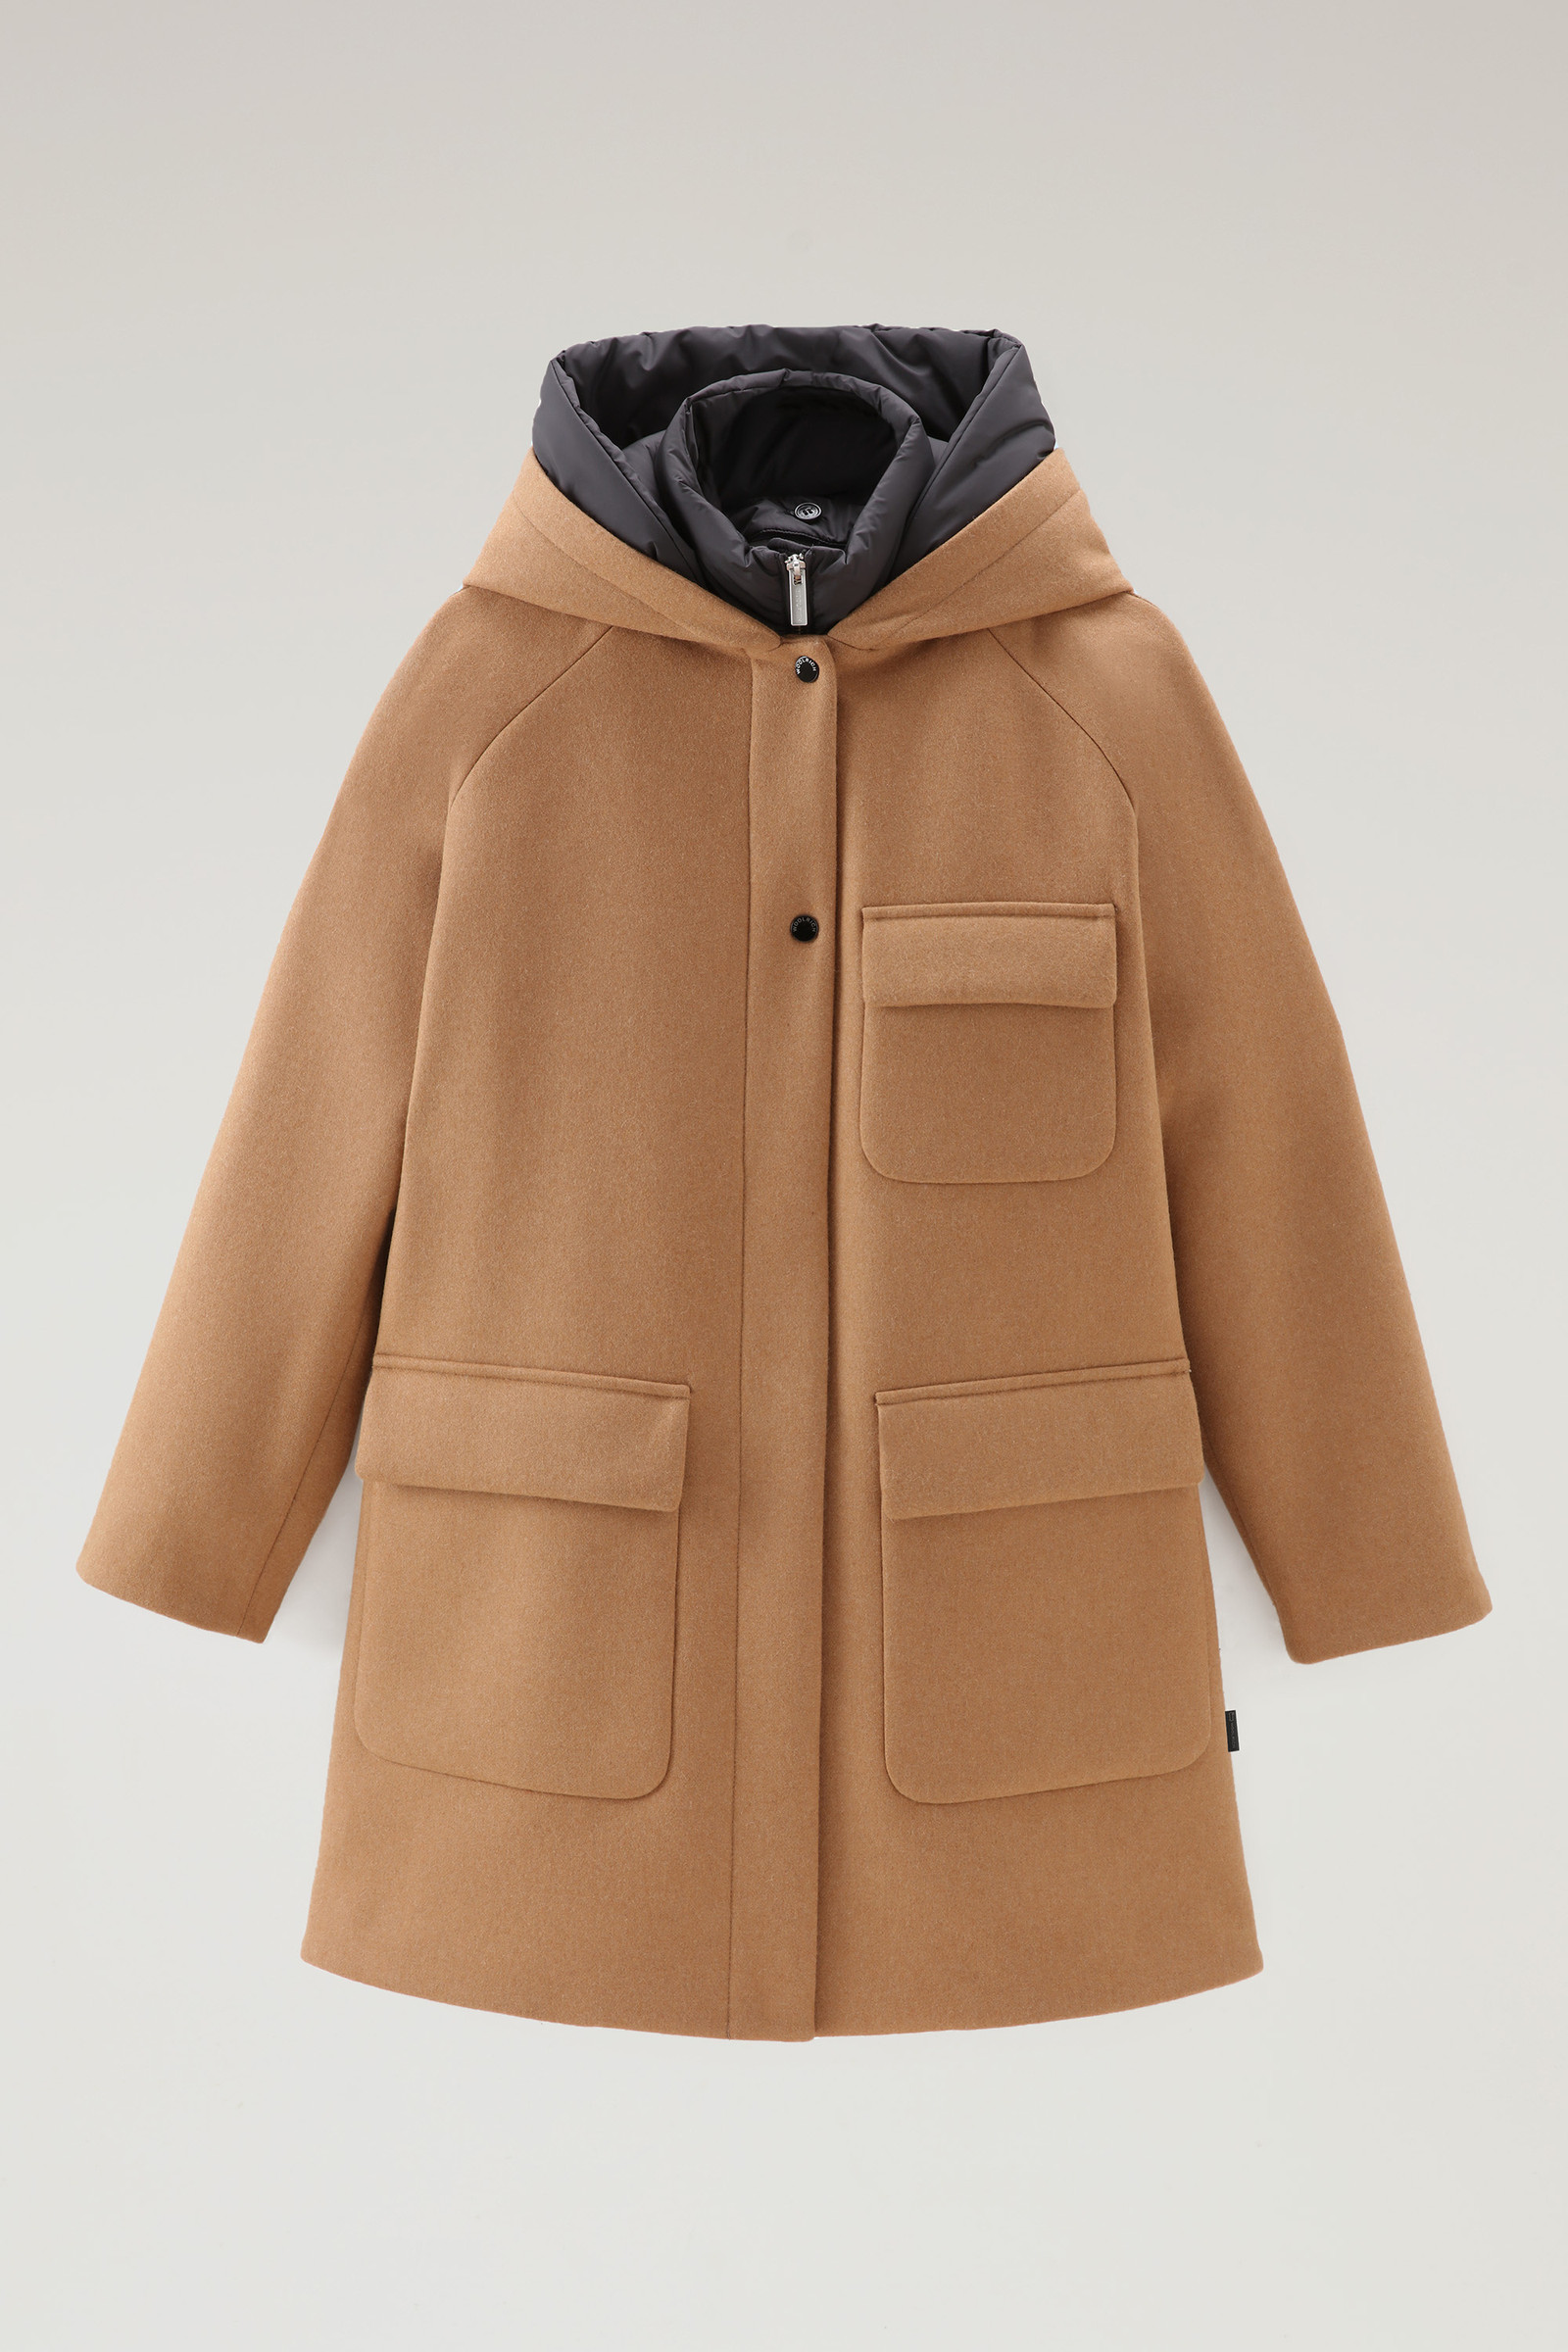 Manteco Wool Sideline 2-in-1 Coat - Women - Brown